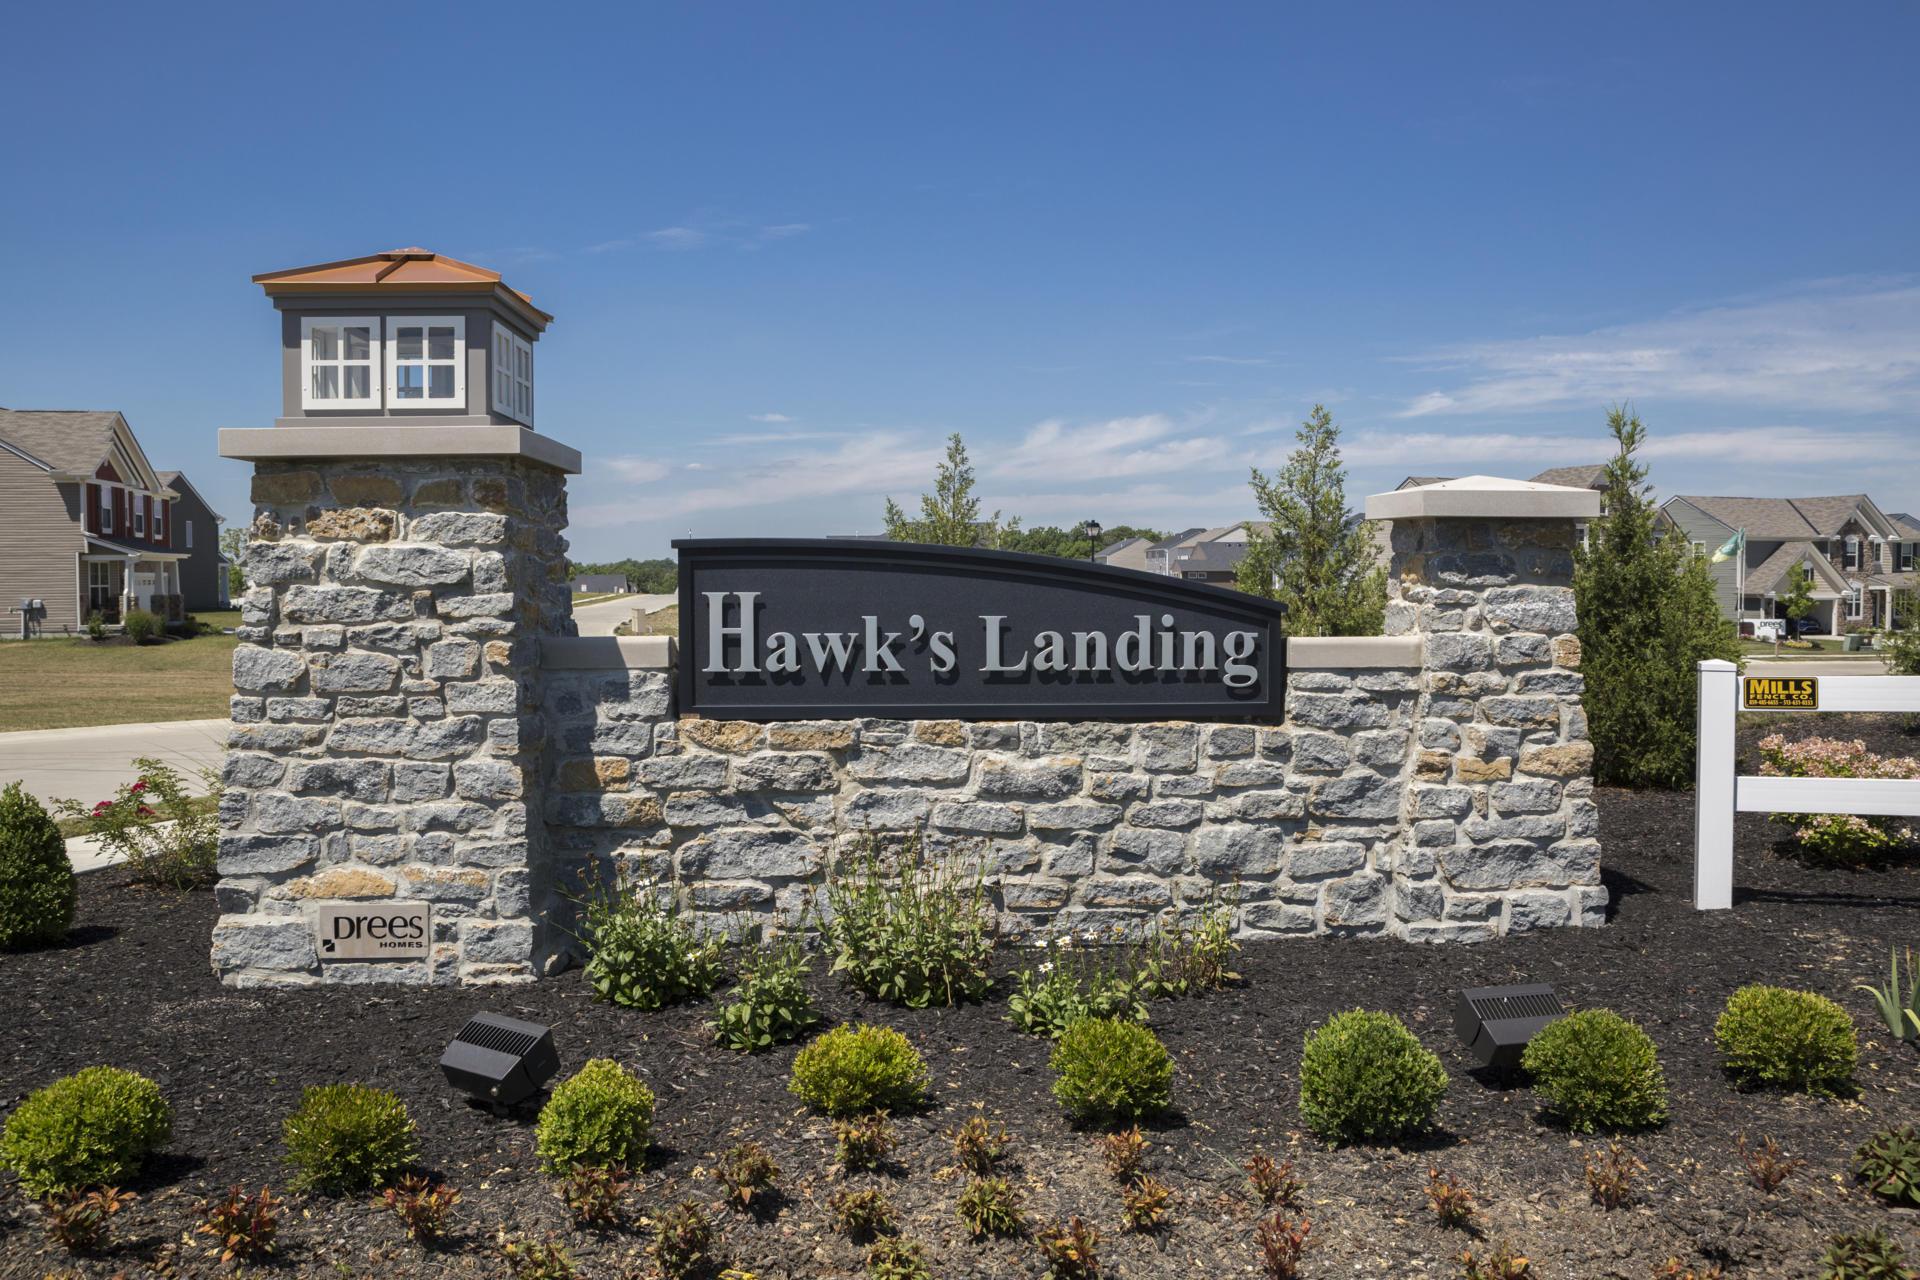 The Hawk's Landing Community Entrance